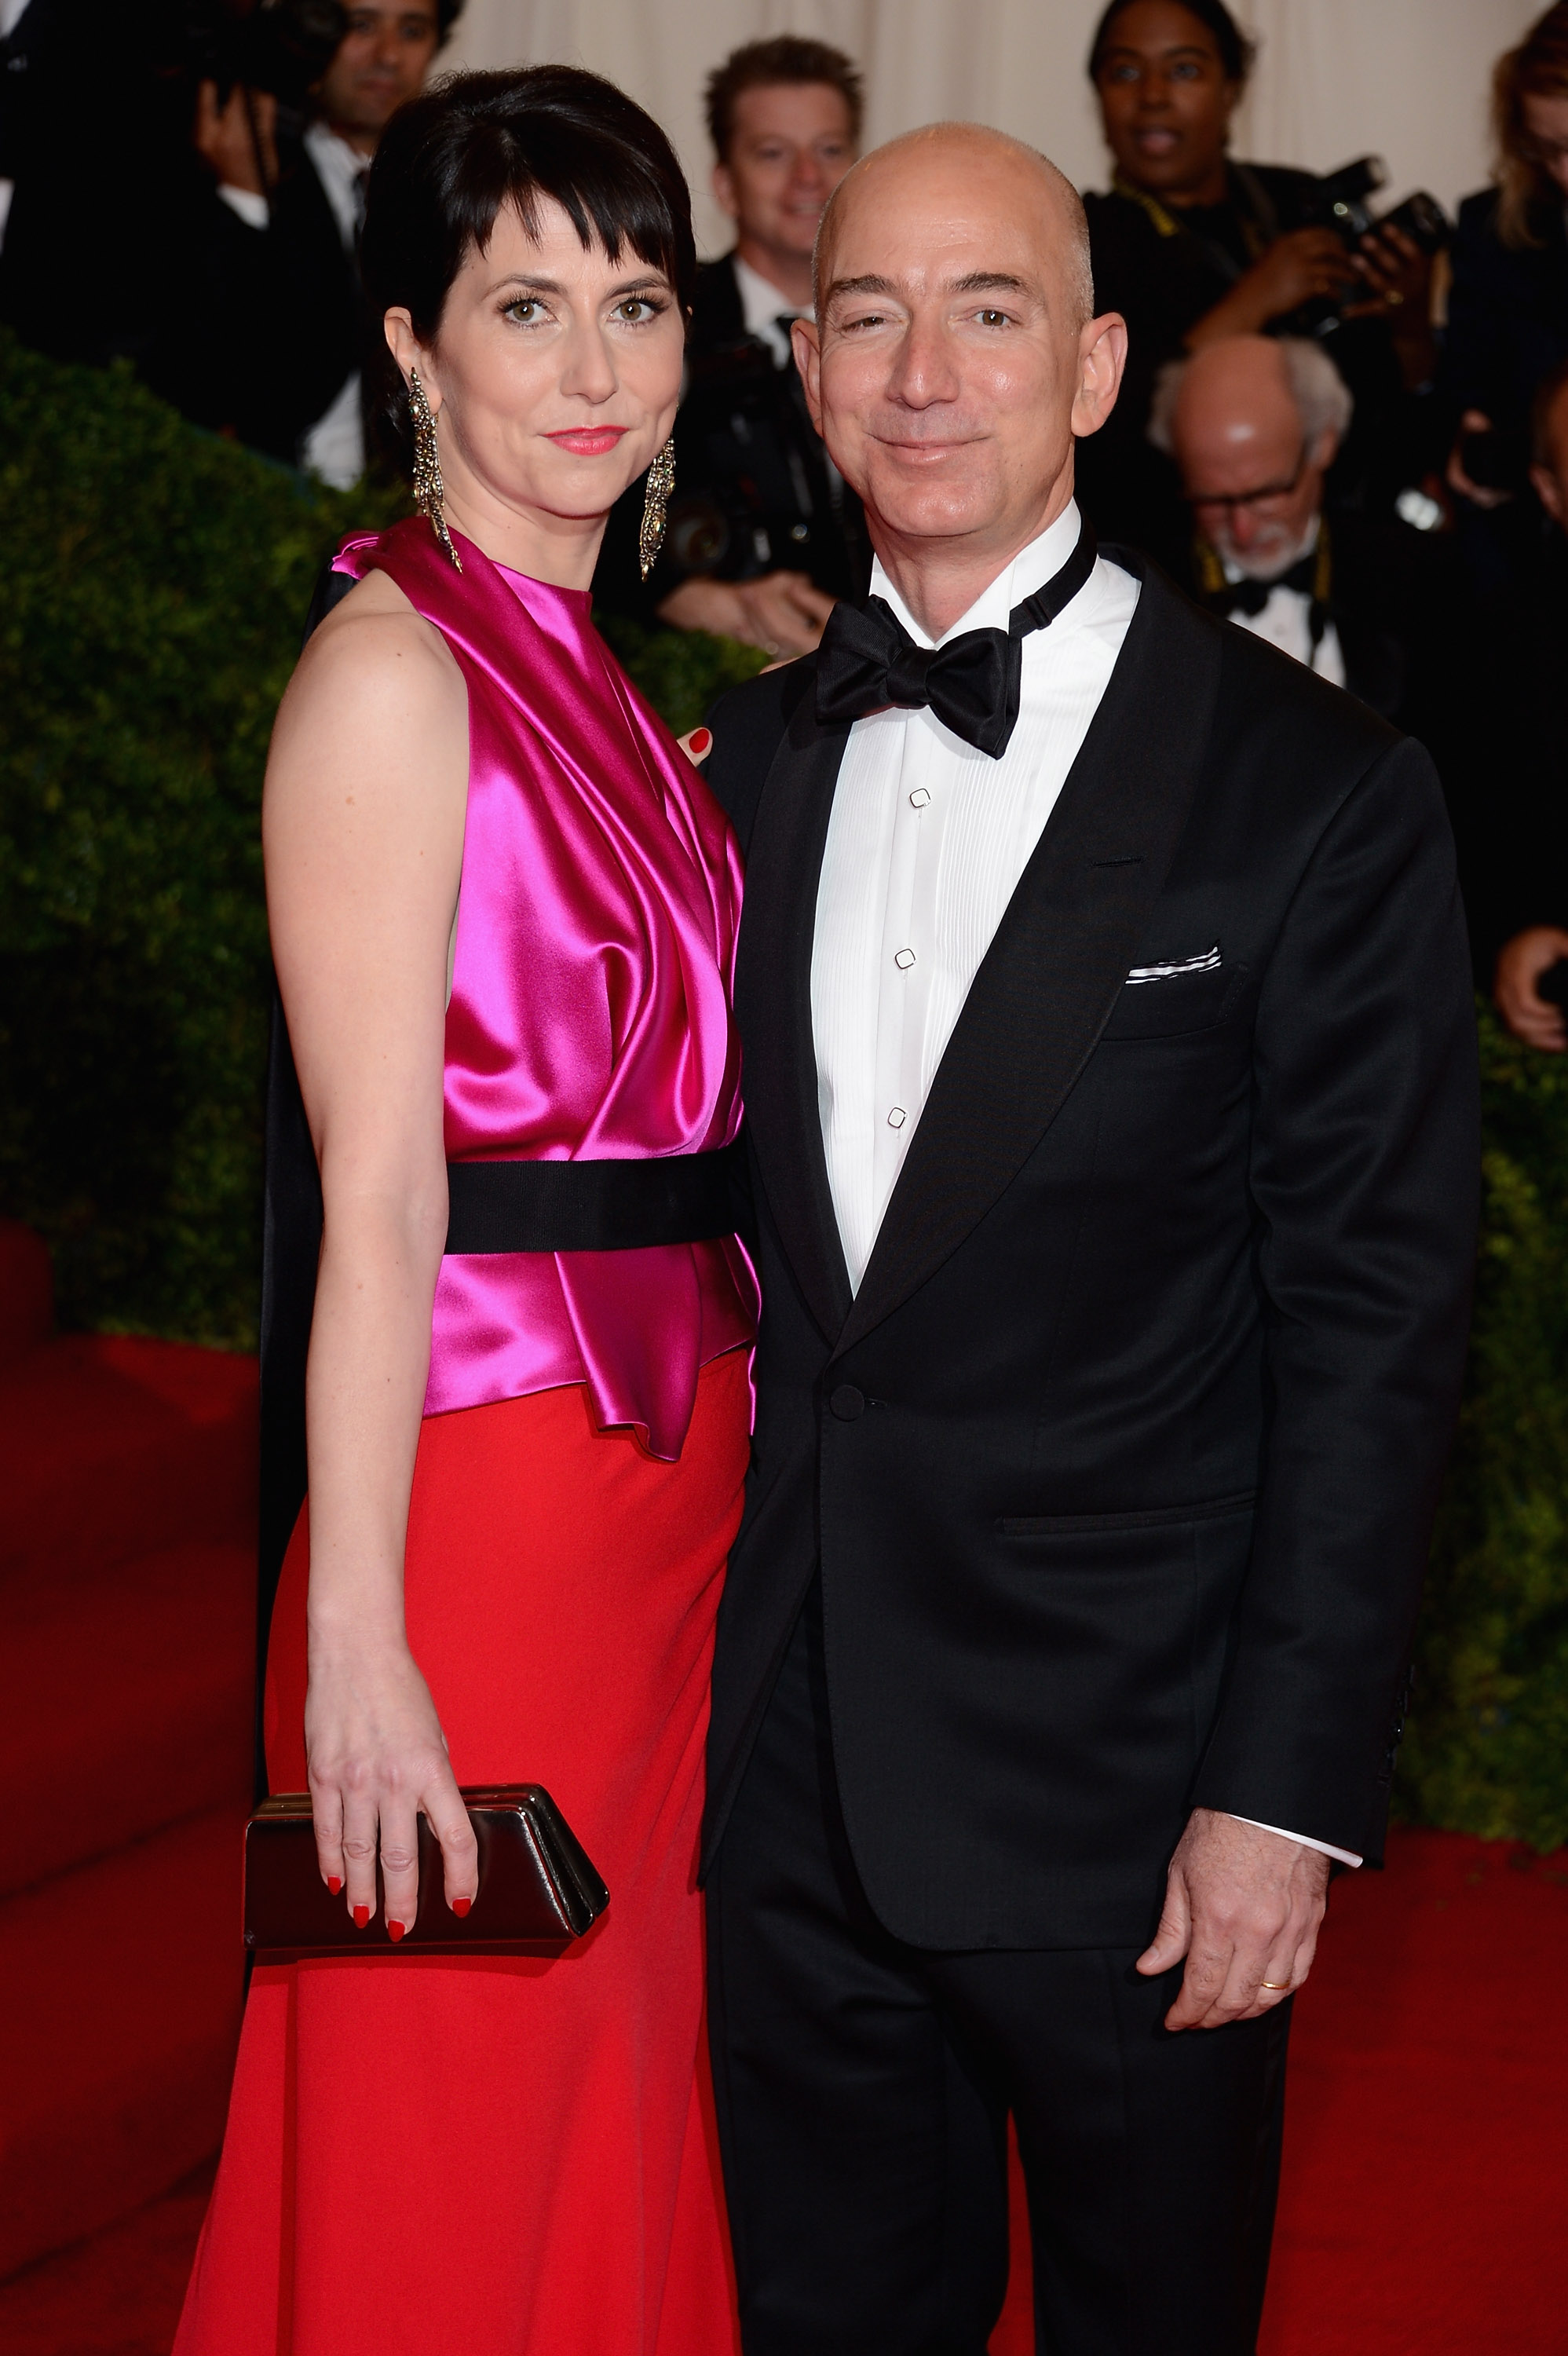 Jeff Bezos, Amazon CEO, and his wife MacKenzie